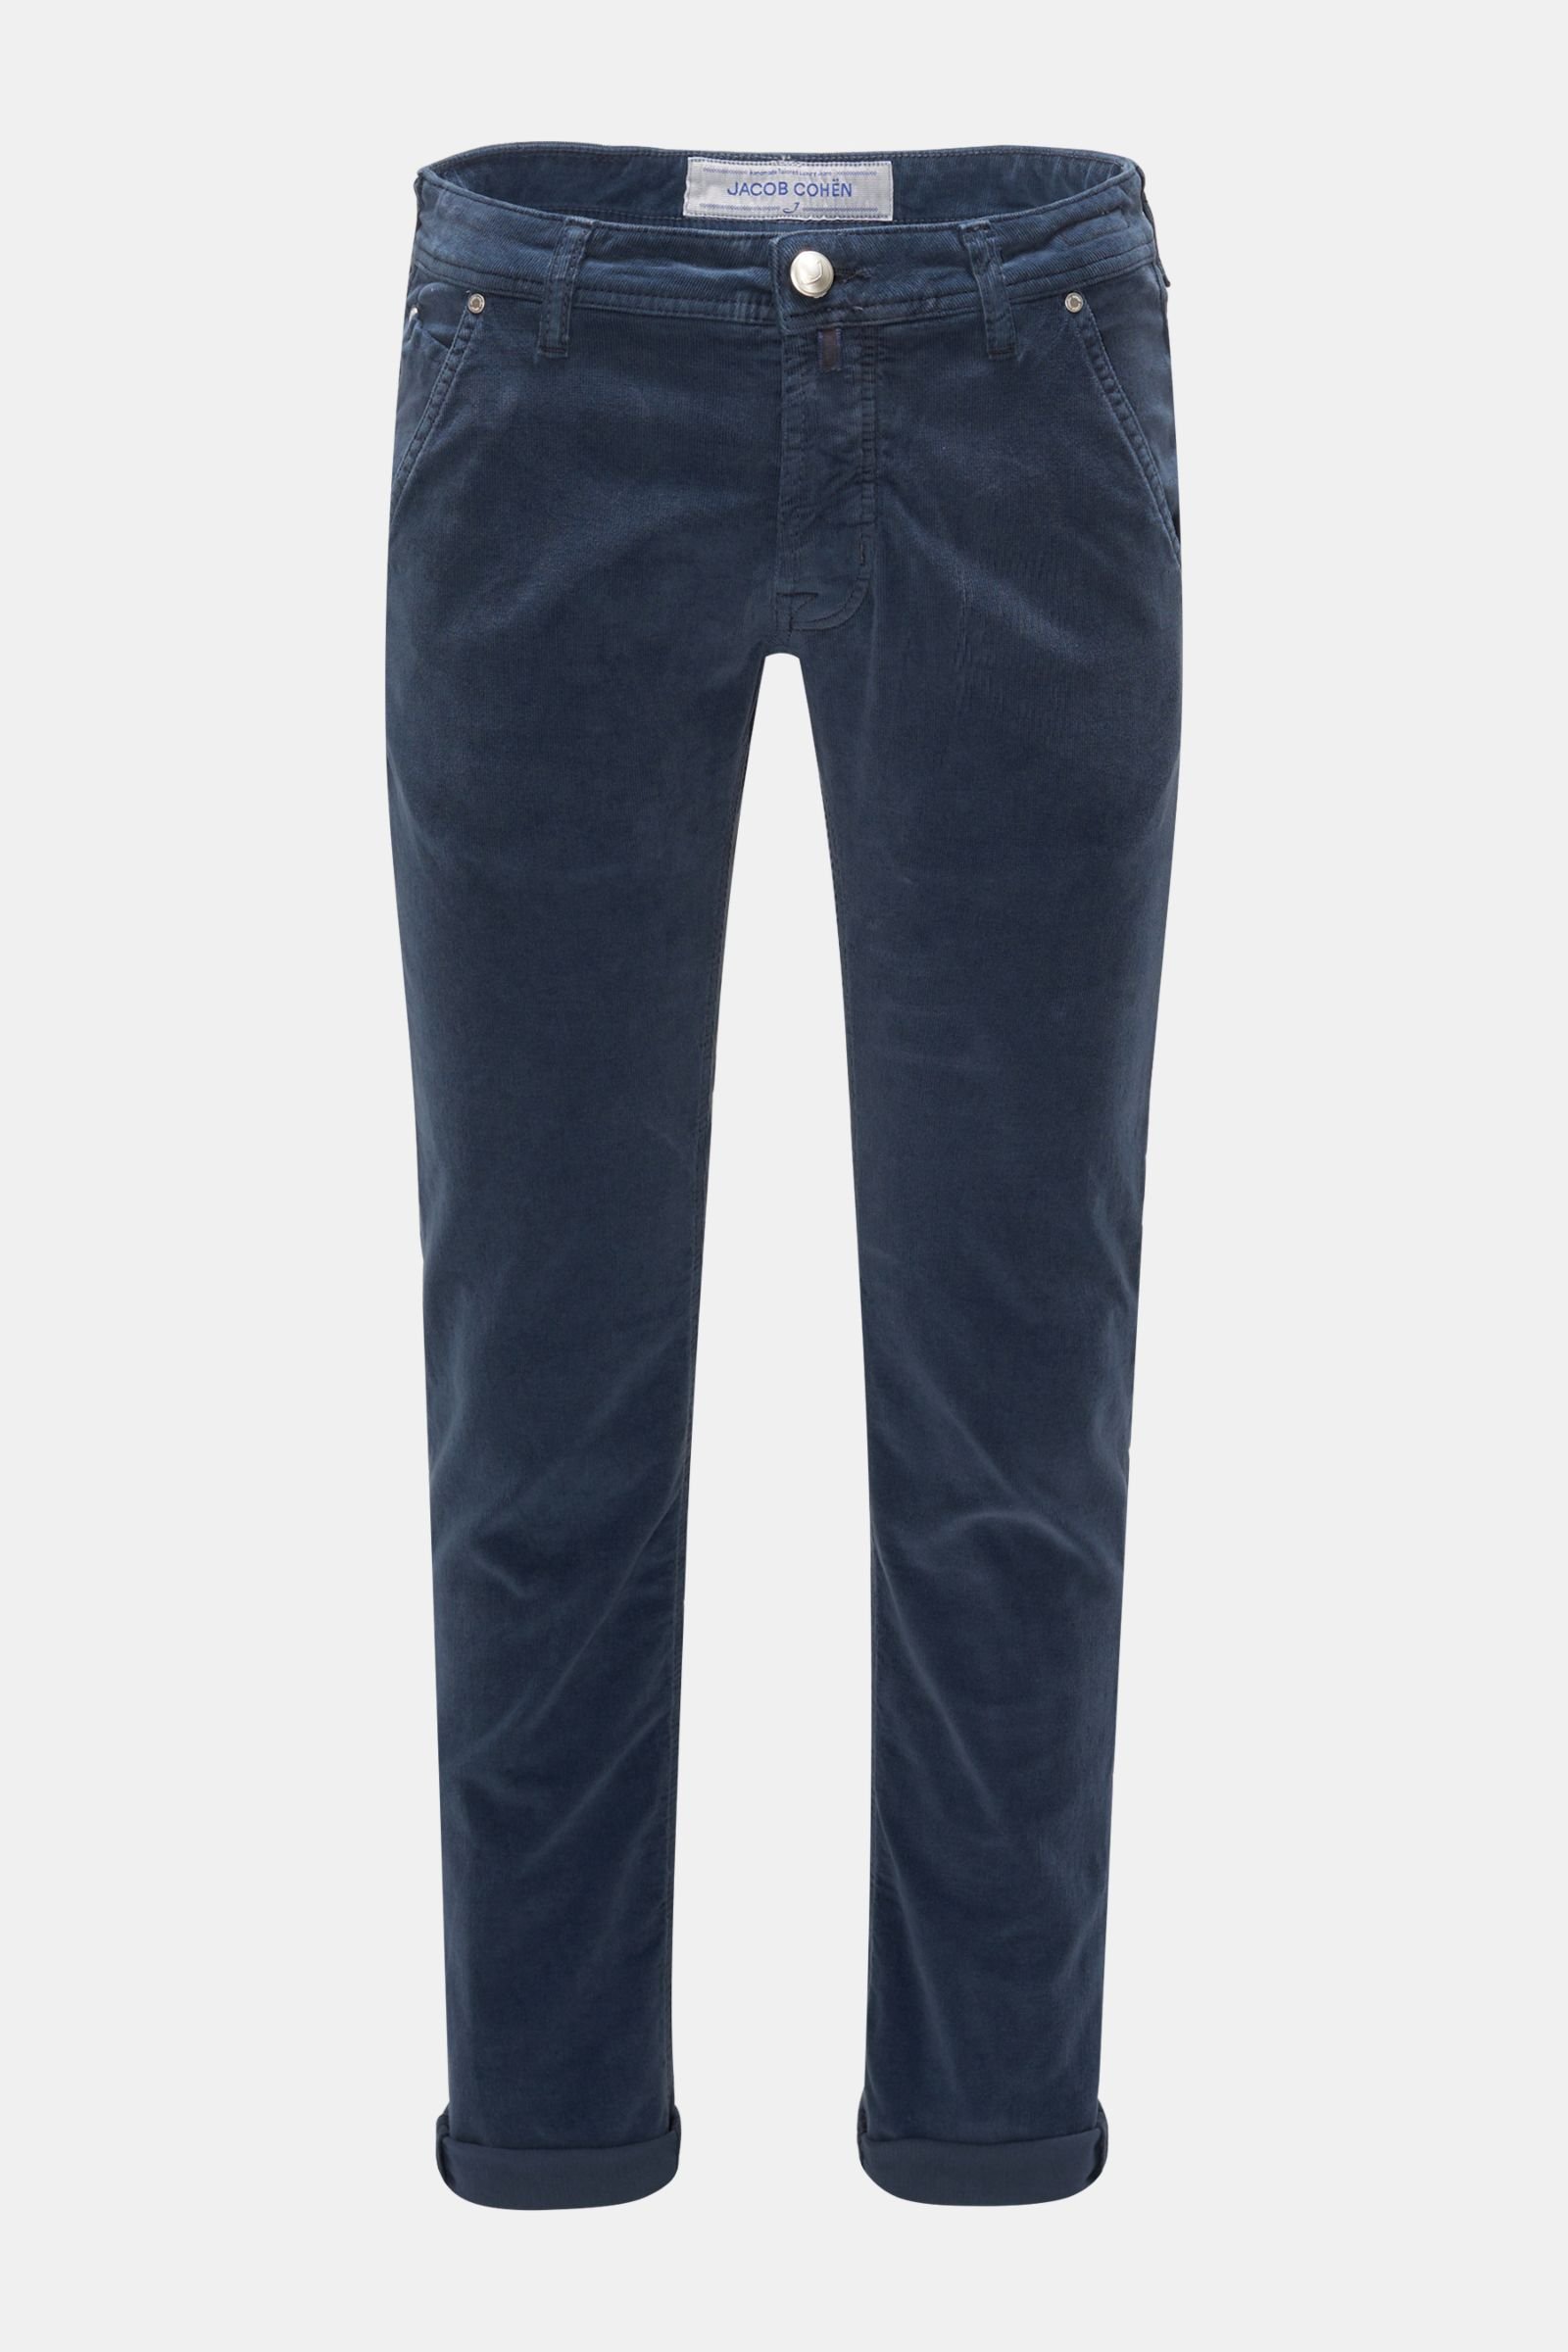 Corduroy trousers 'J613 Comfort Slim Fit' navy